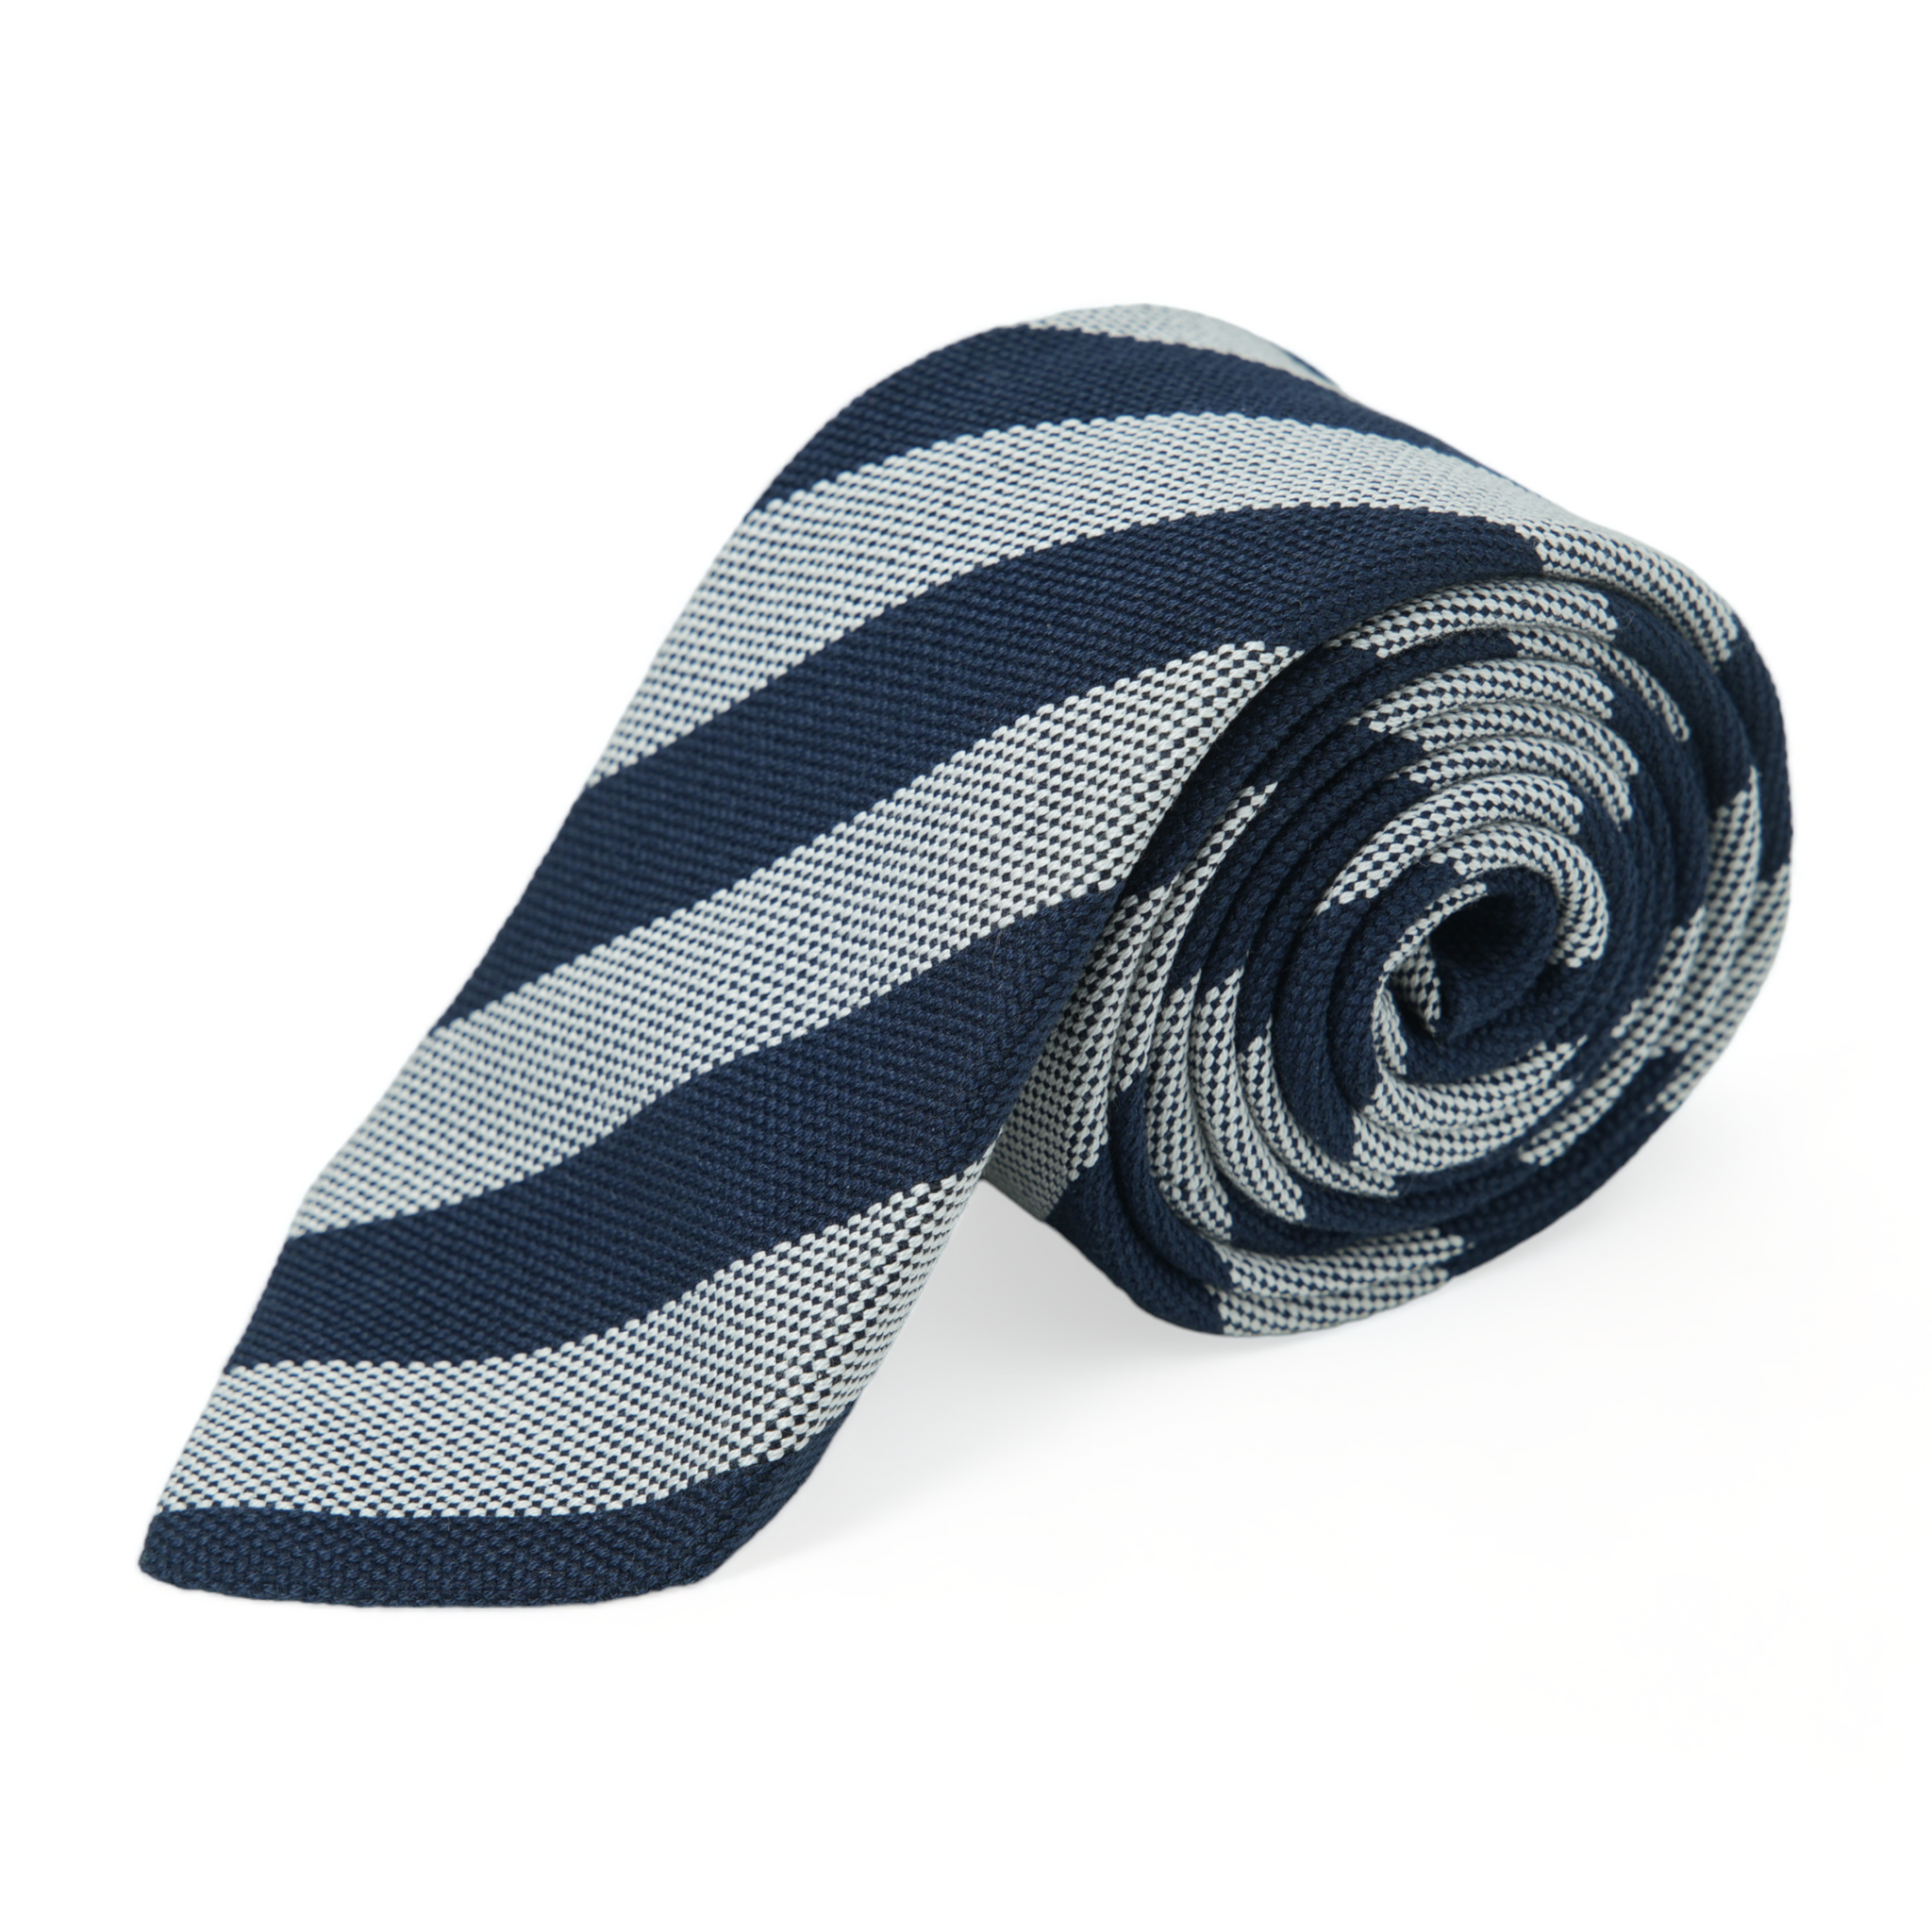 Chokore Quartz - Pocket Square & Stripes (Navy & Silver) Necktie